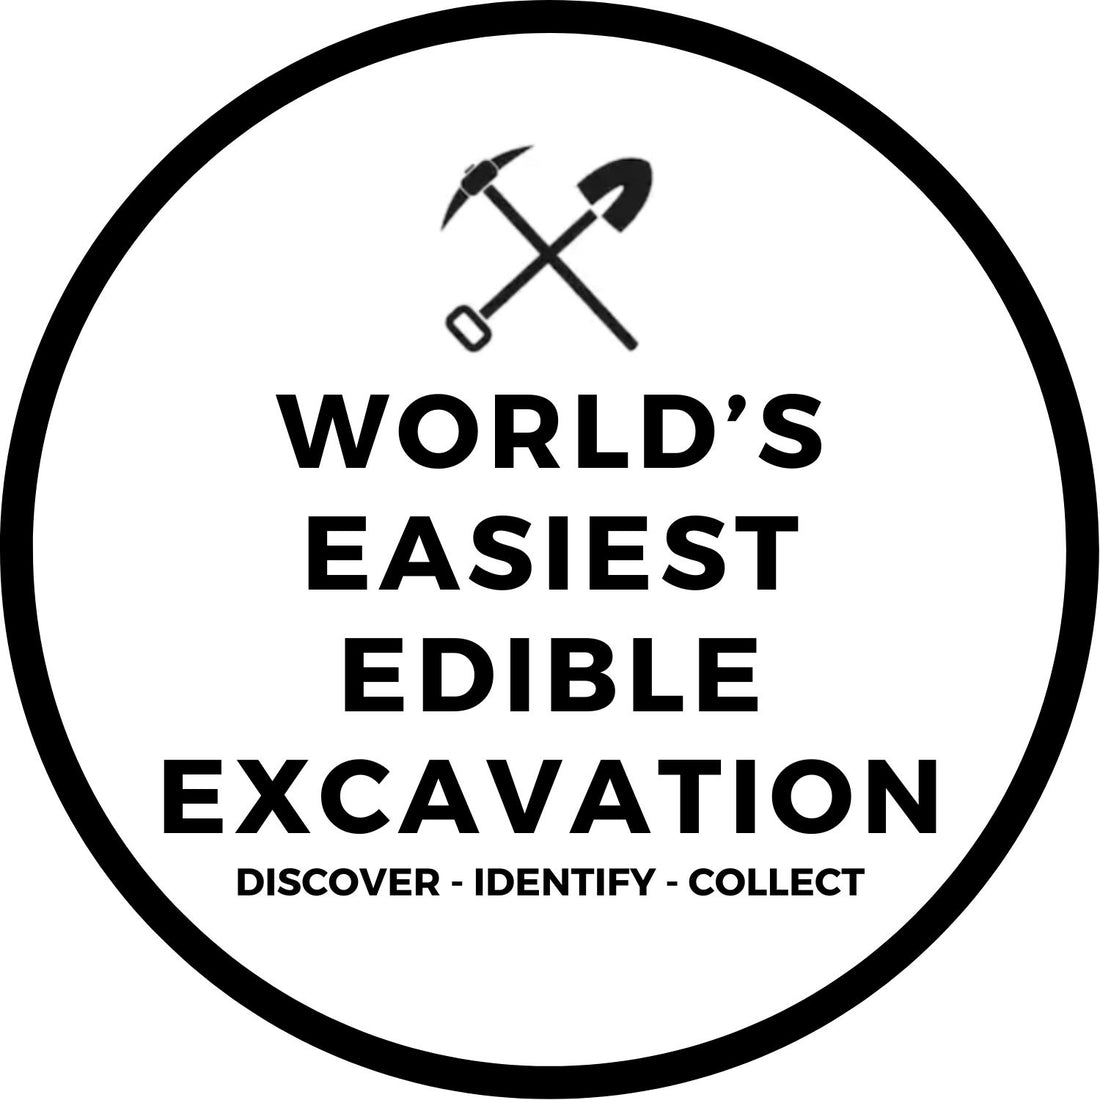 WORLD’S EASIEST EDIBLE EXCAVATION